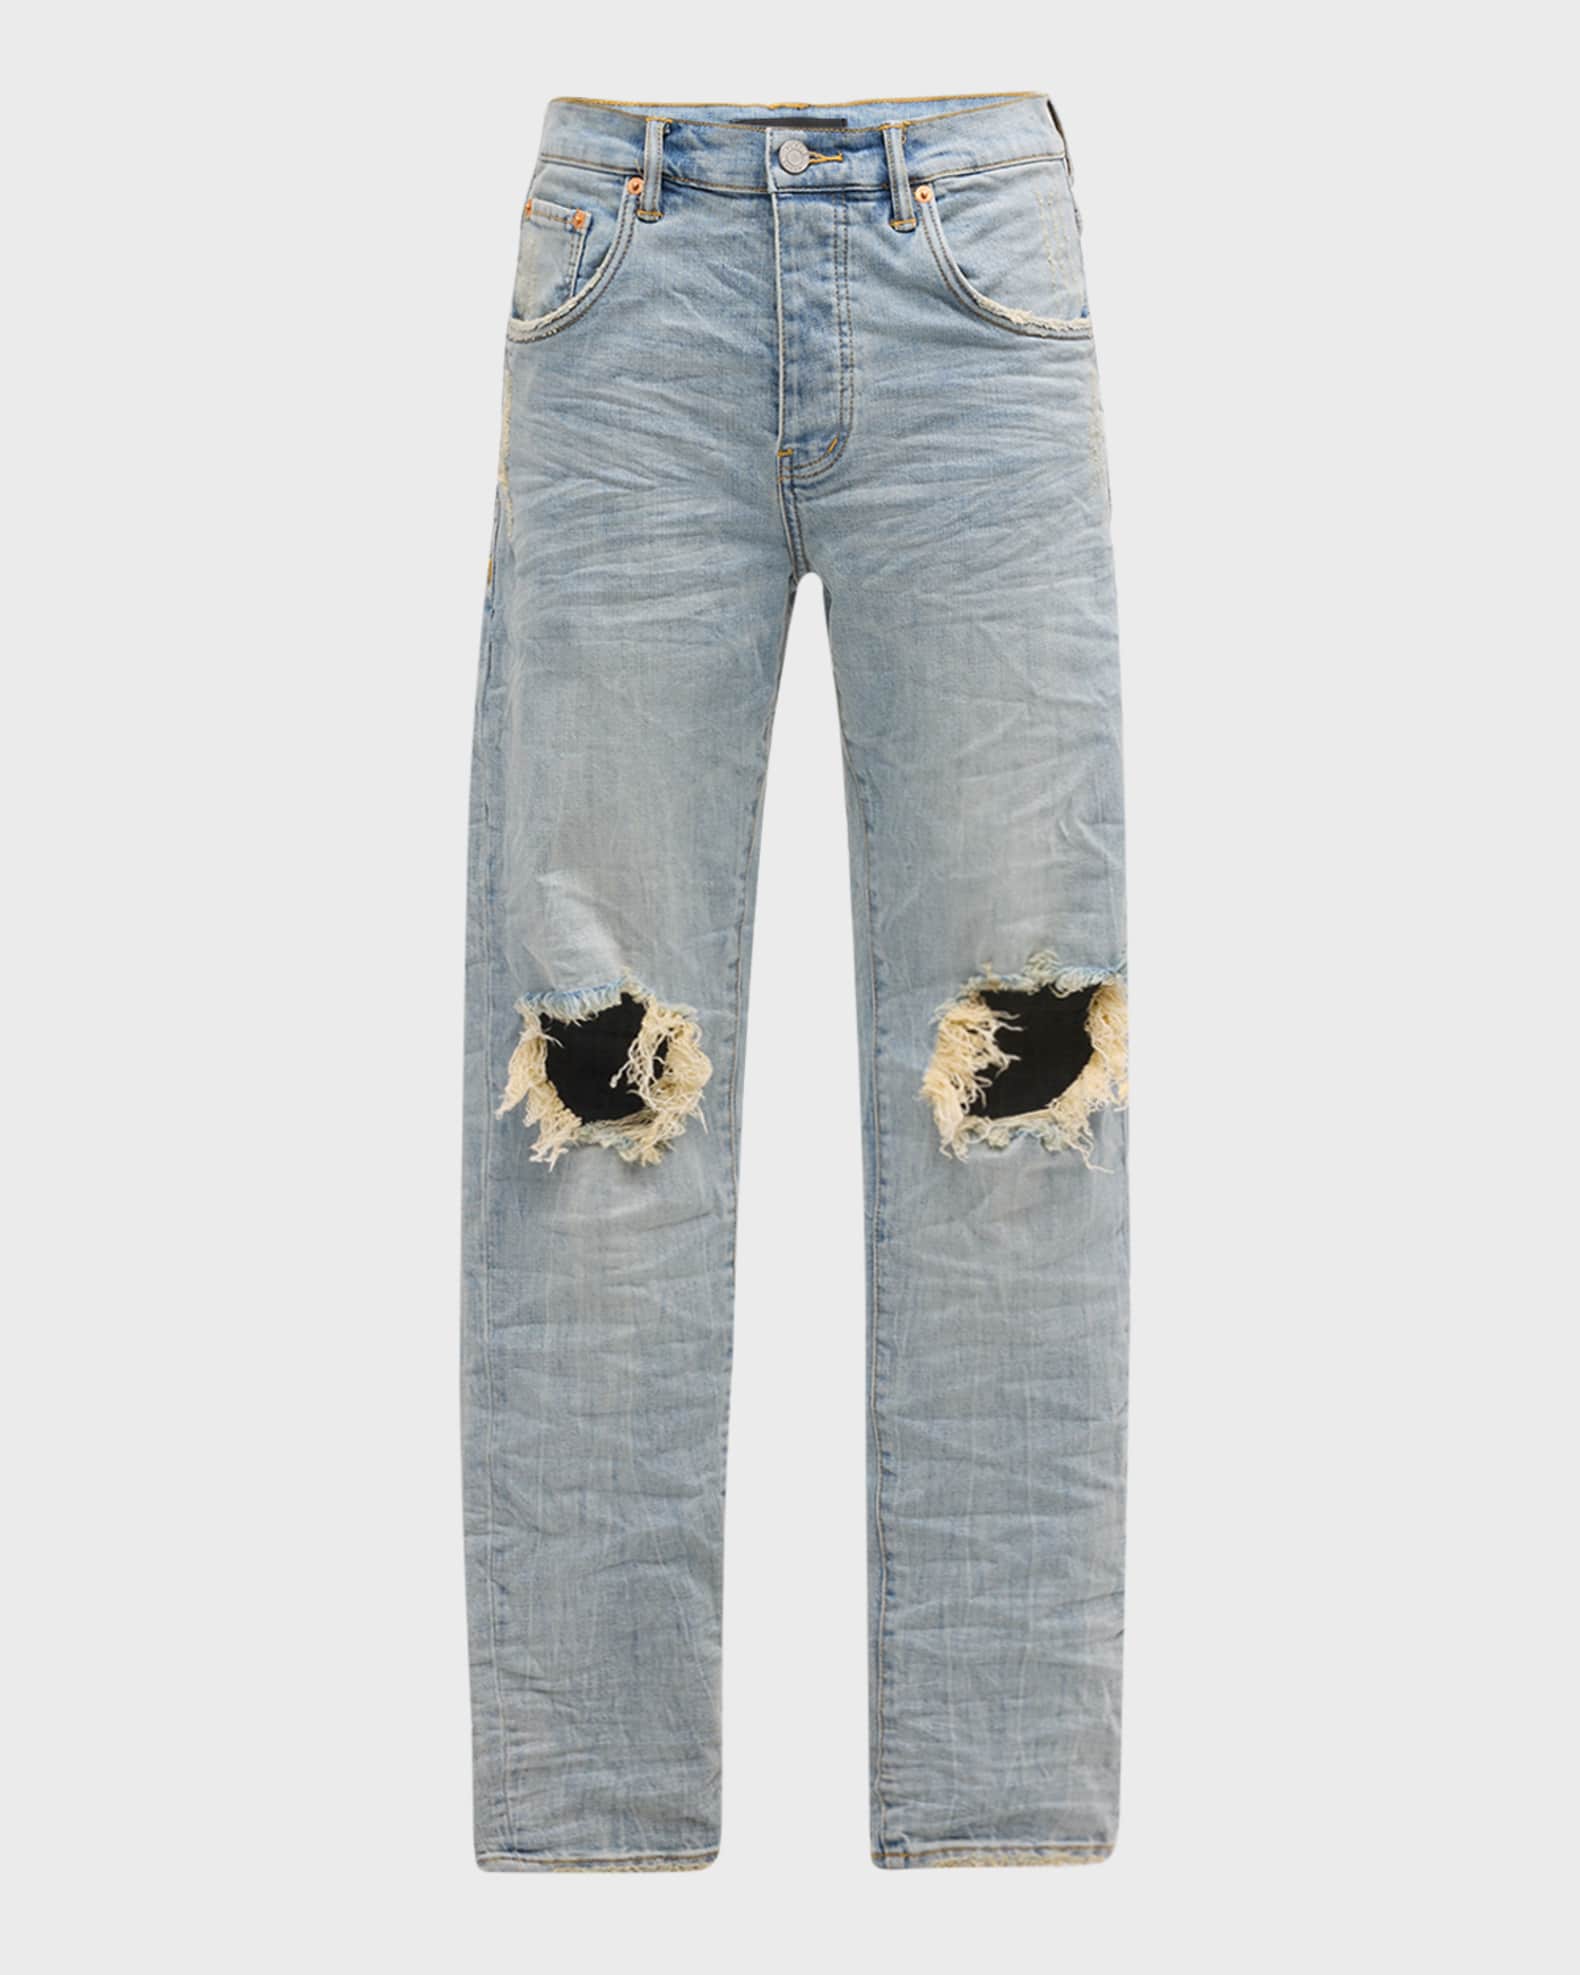 PURPLE Men's Distressed Light-Wash Skinny Denim Jeans